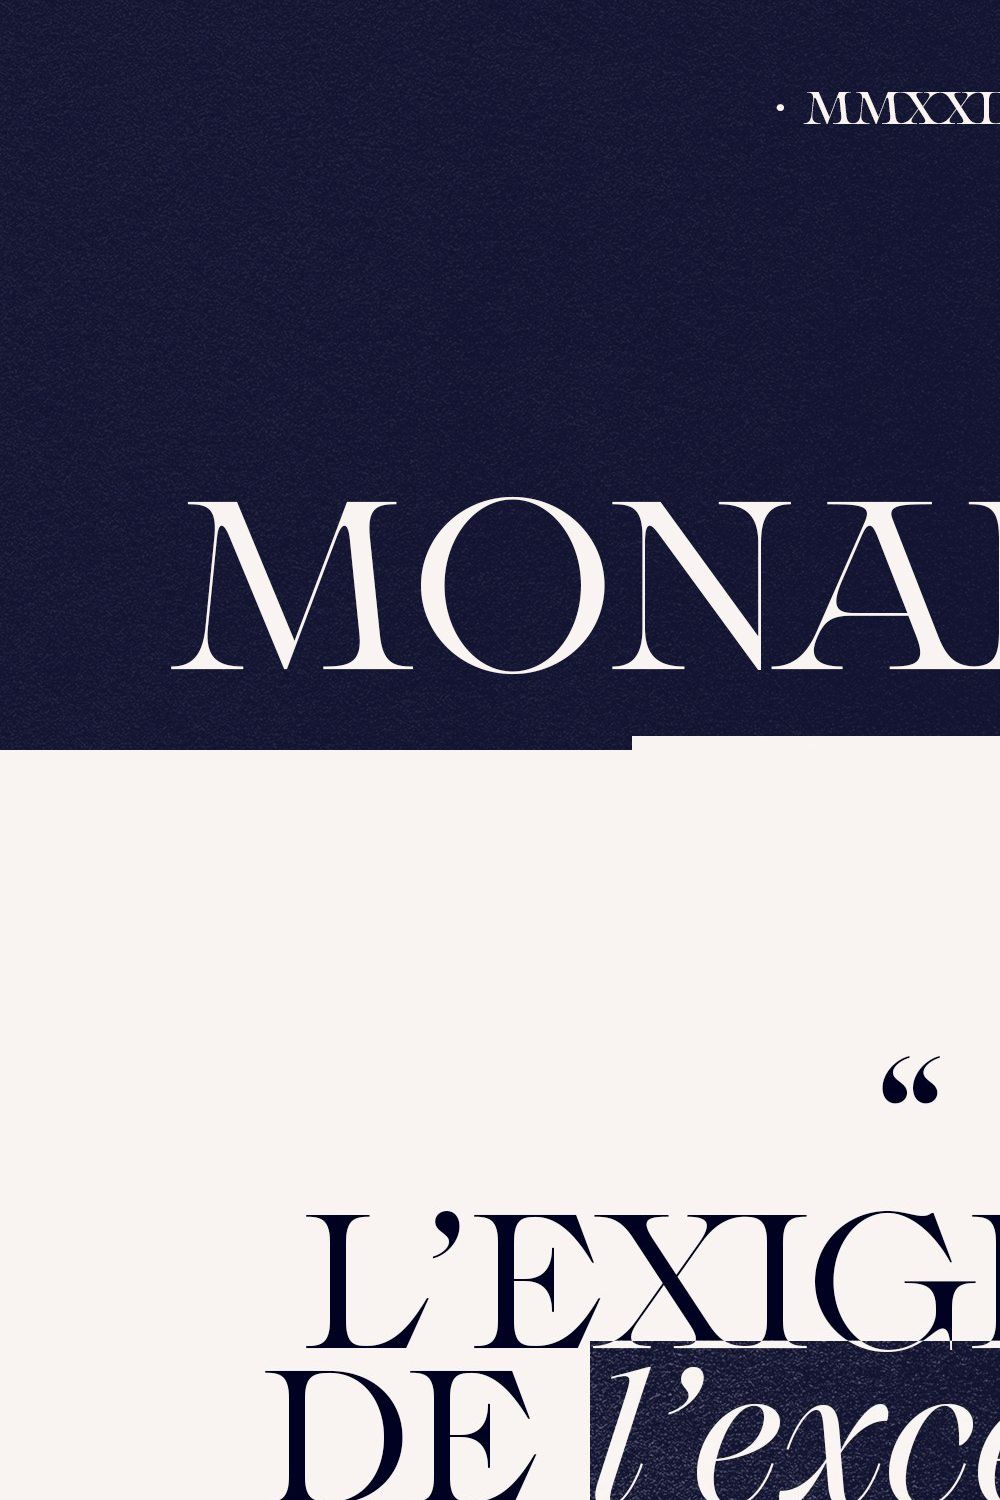 Monarque Serif - Basic Pack pinterest preview image.